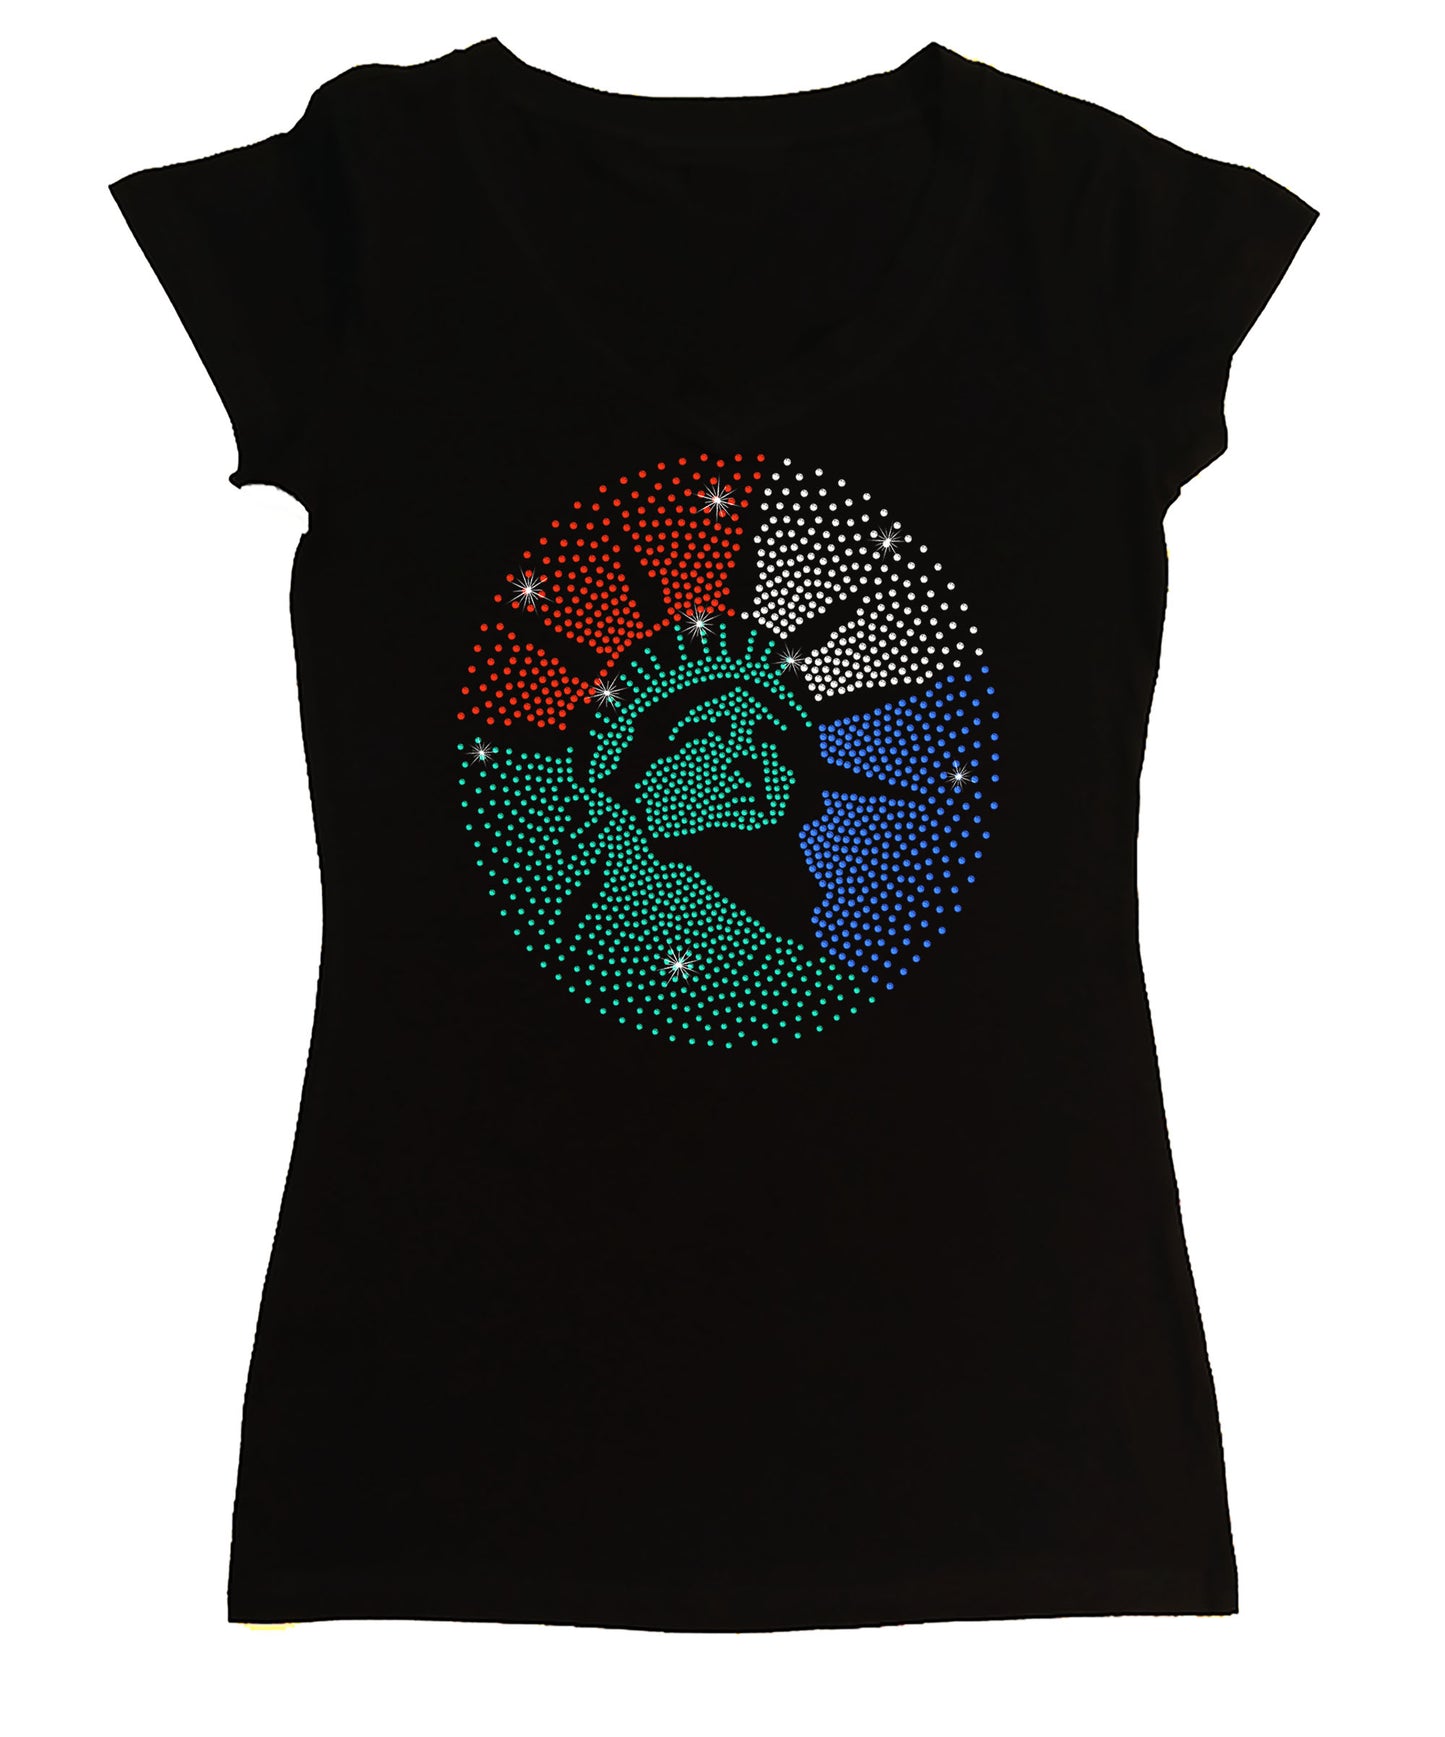 Women's Rhinestone Fitted Tight Snug Shirt Statue of Libery - Patriotic Shirt, USA, Lady Liberty